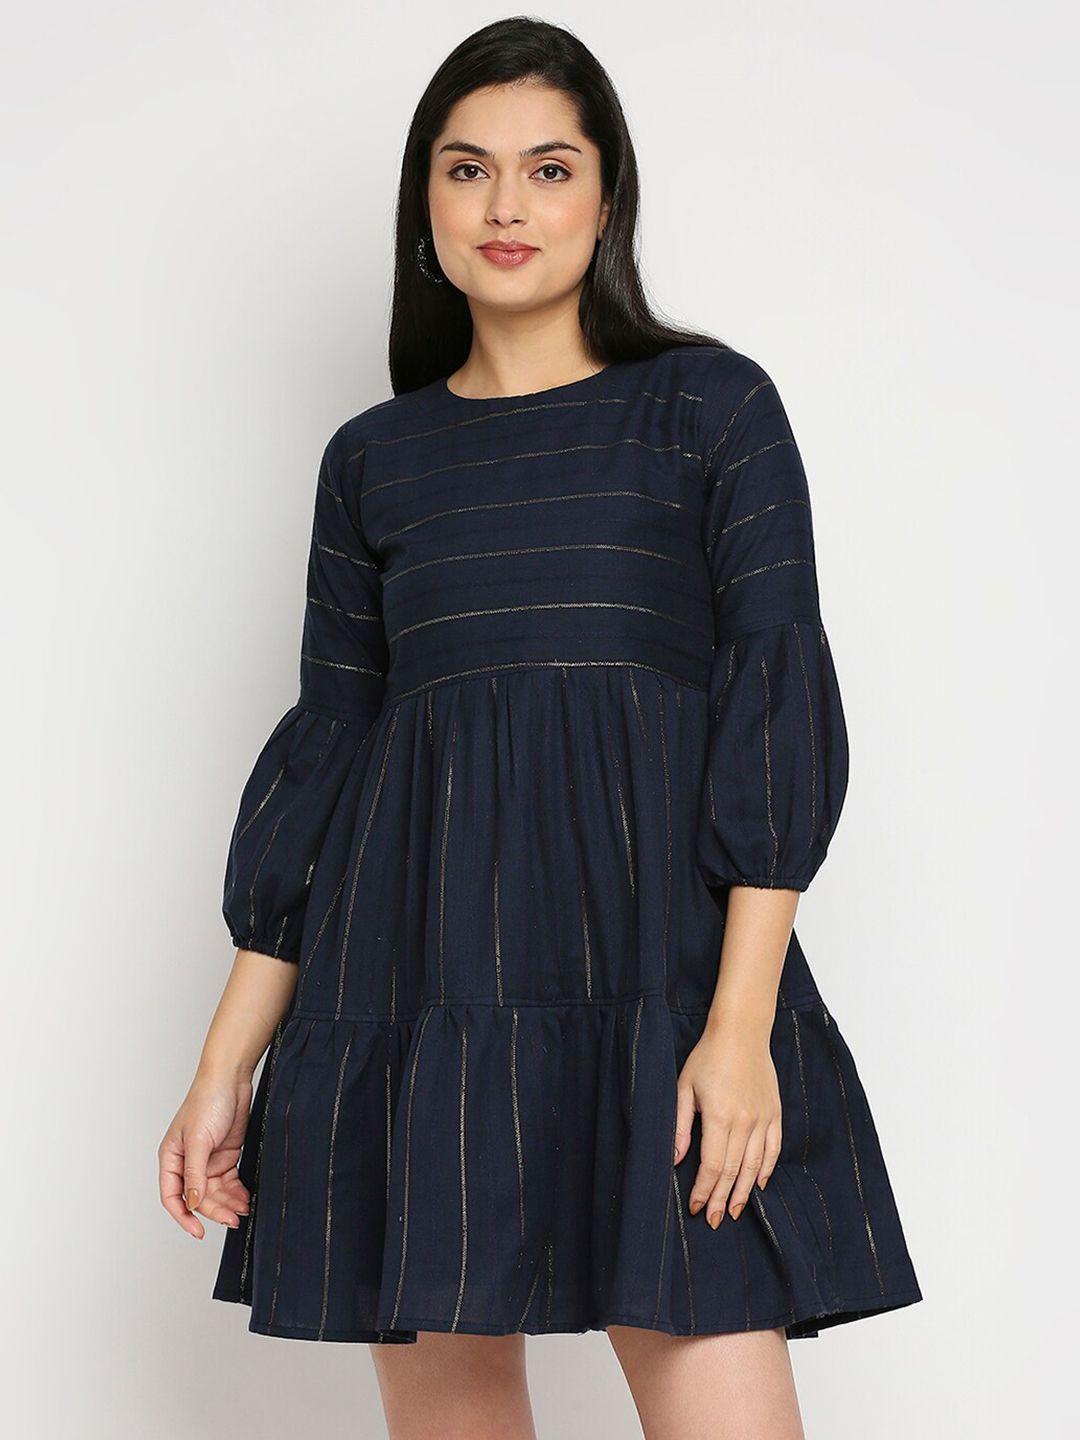 kuber studio navy blue striped shimmer tier cotton dress